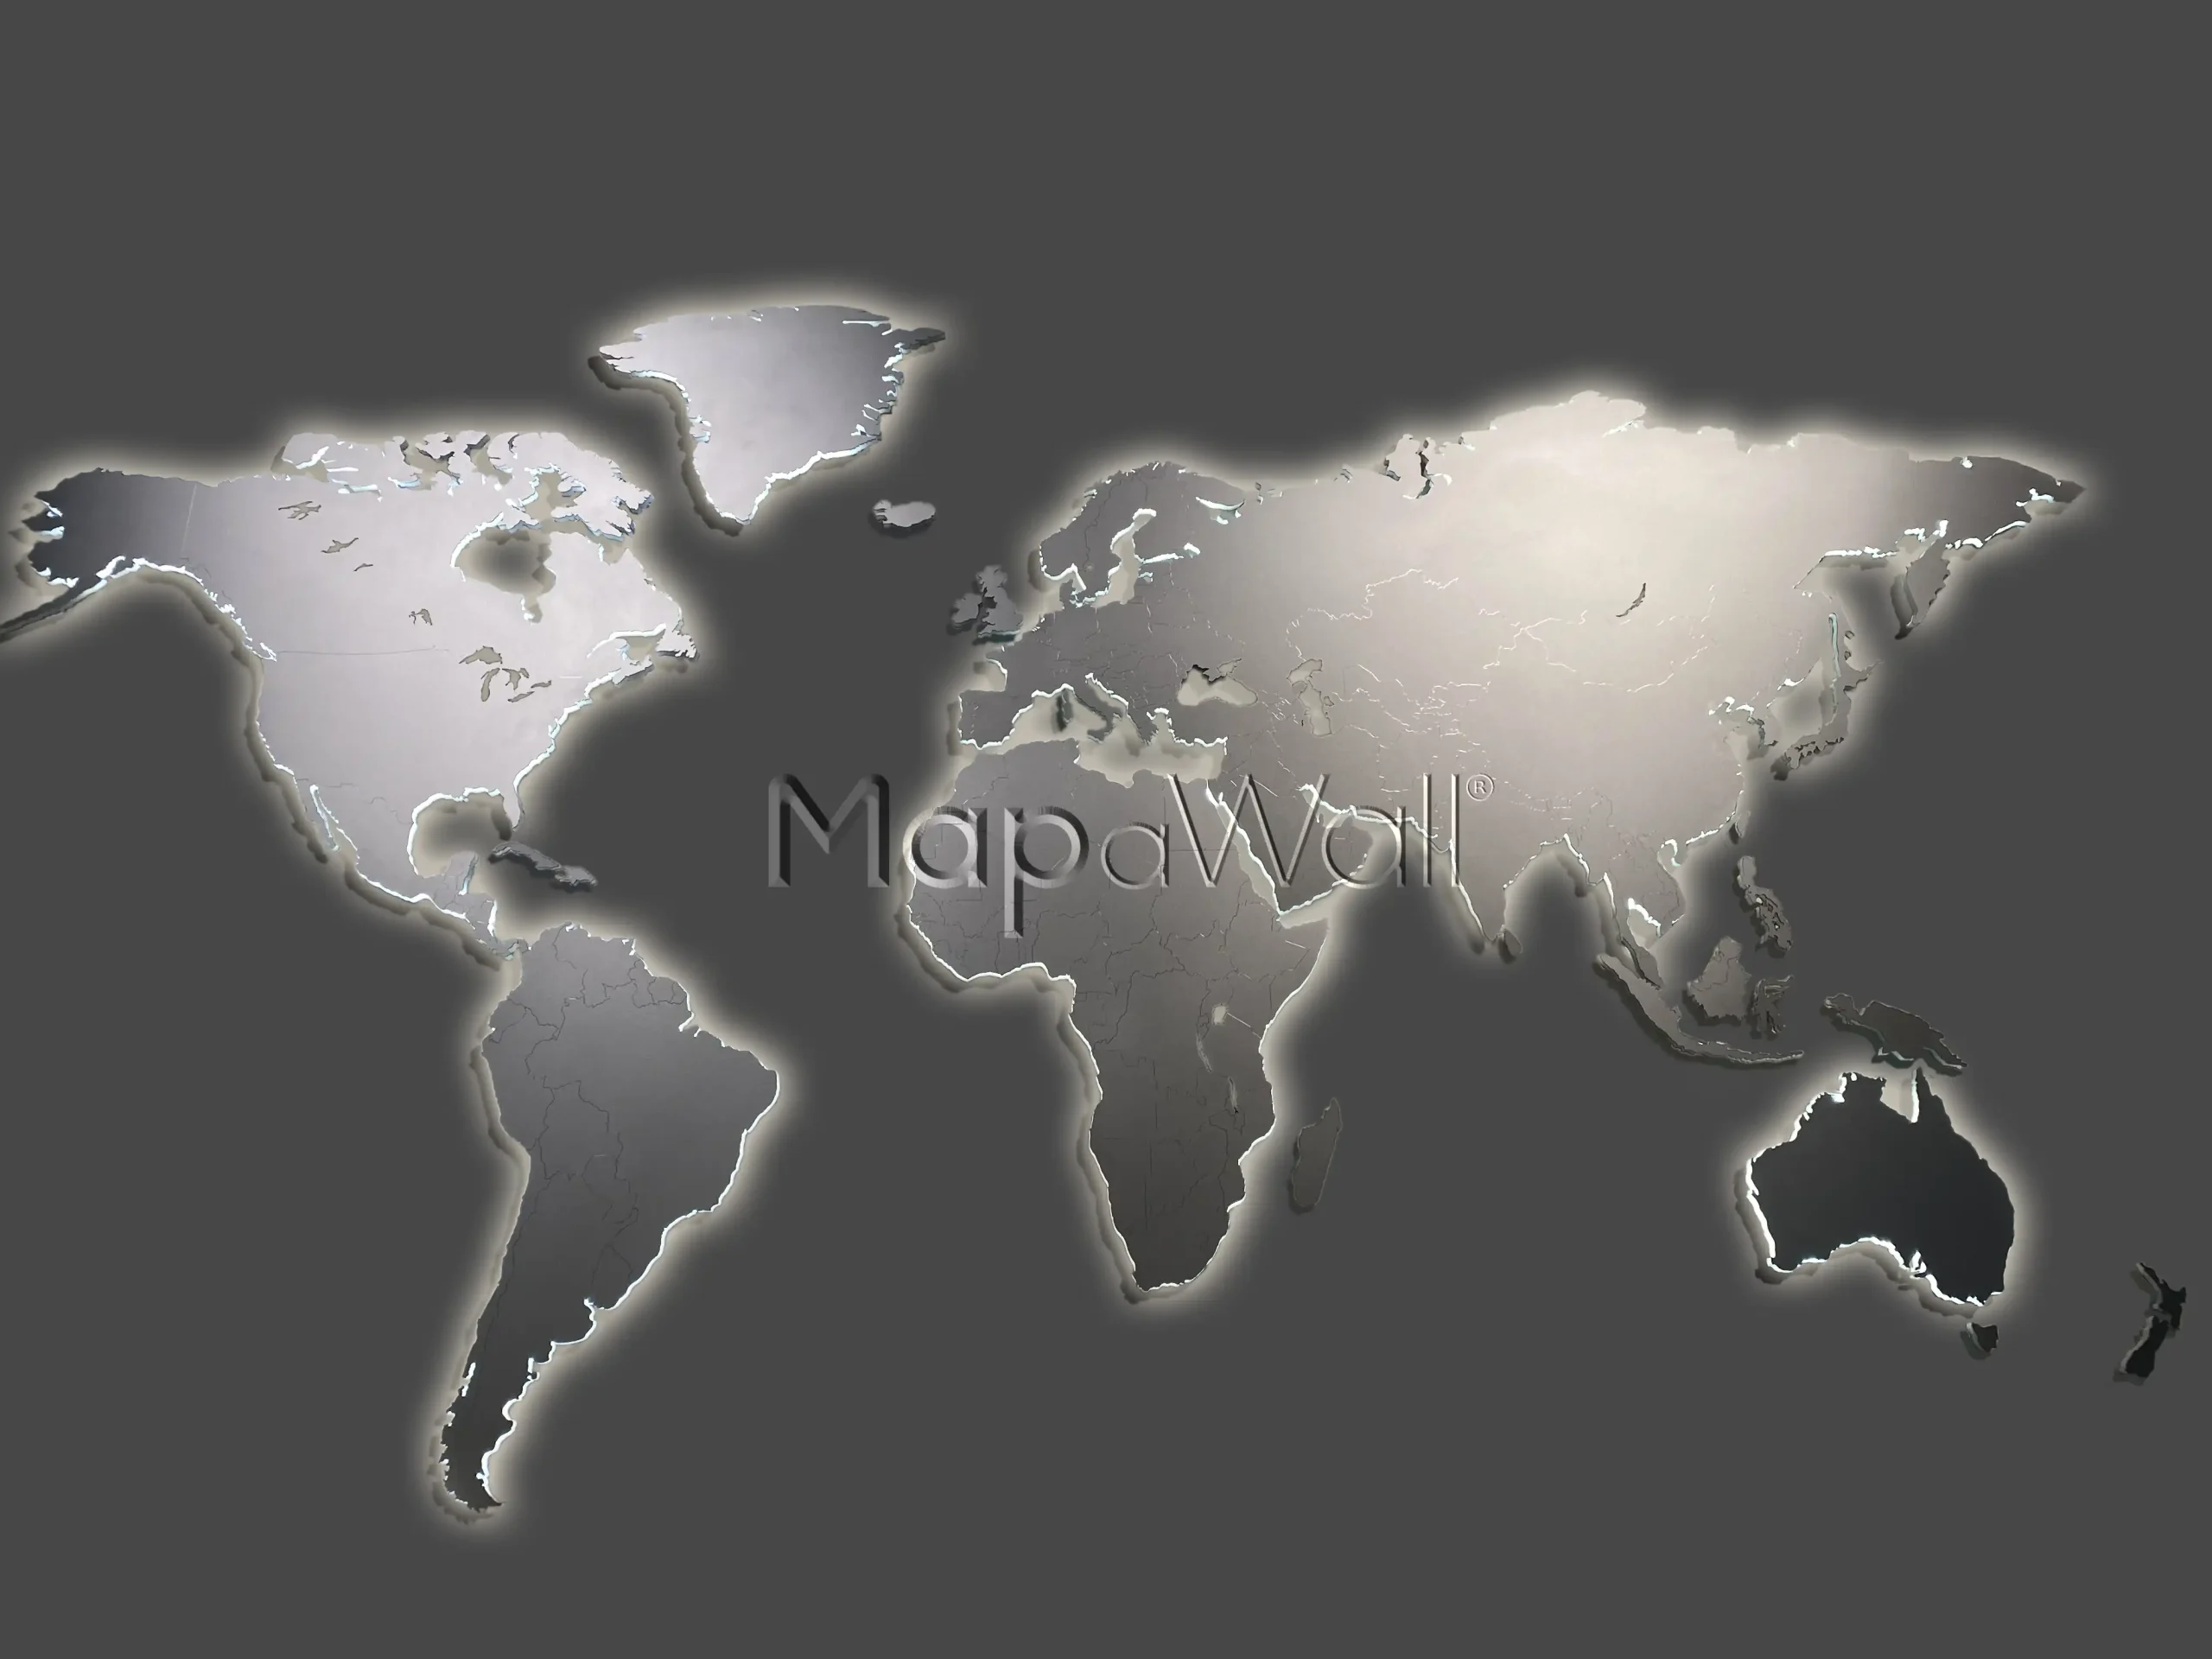 The LED Illuminated Stainless Steel world map